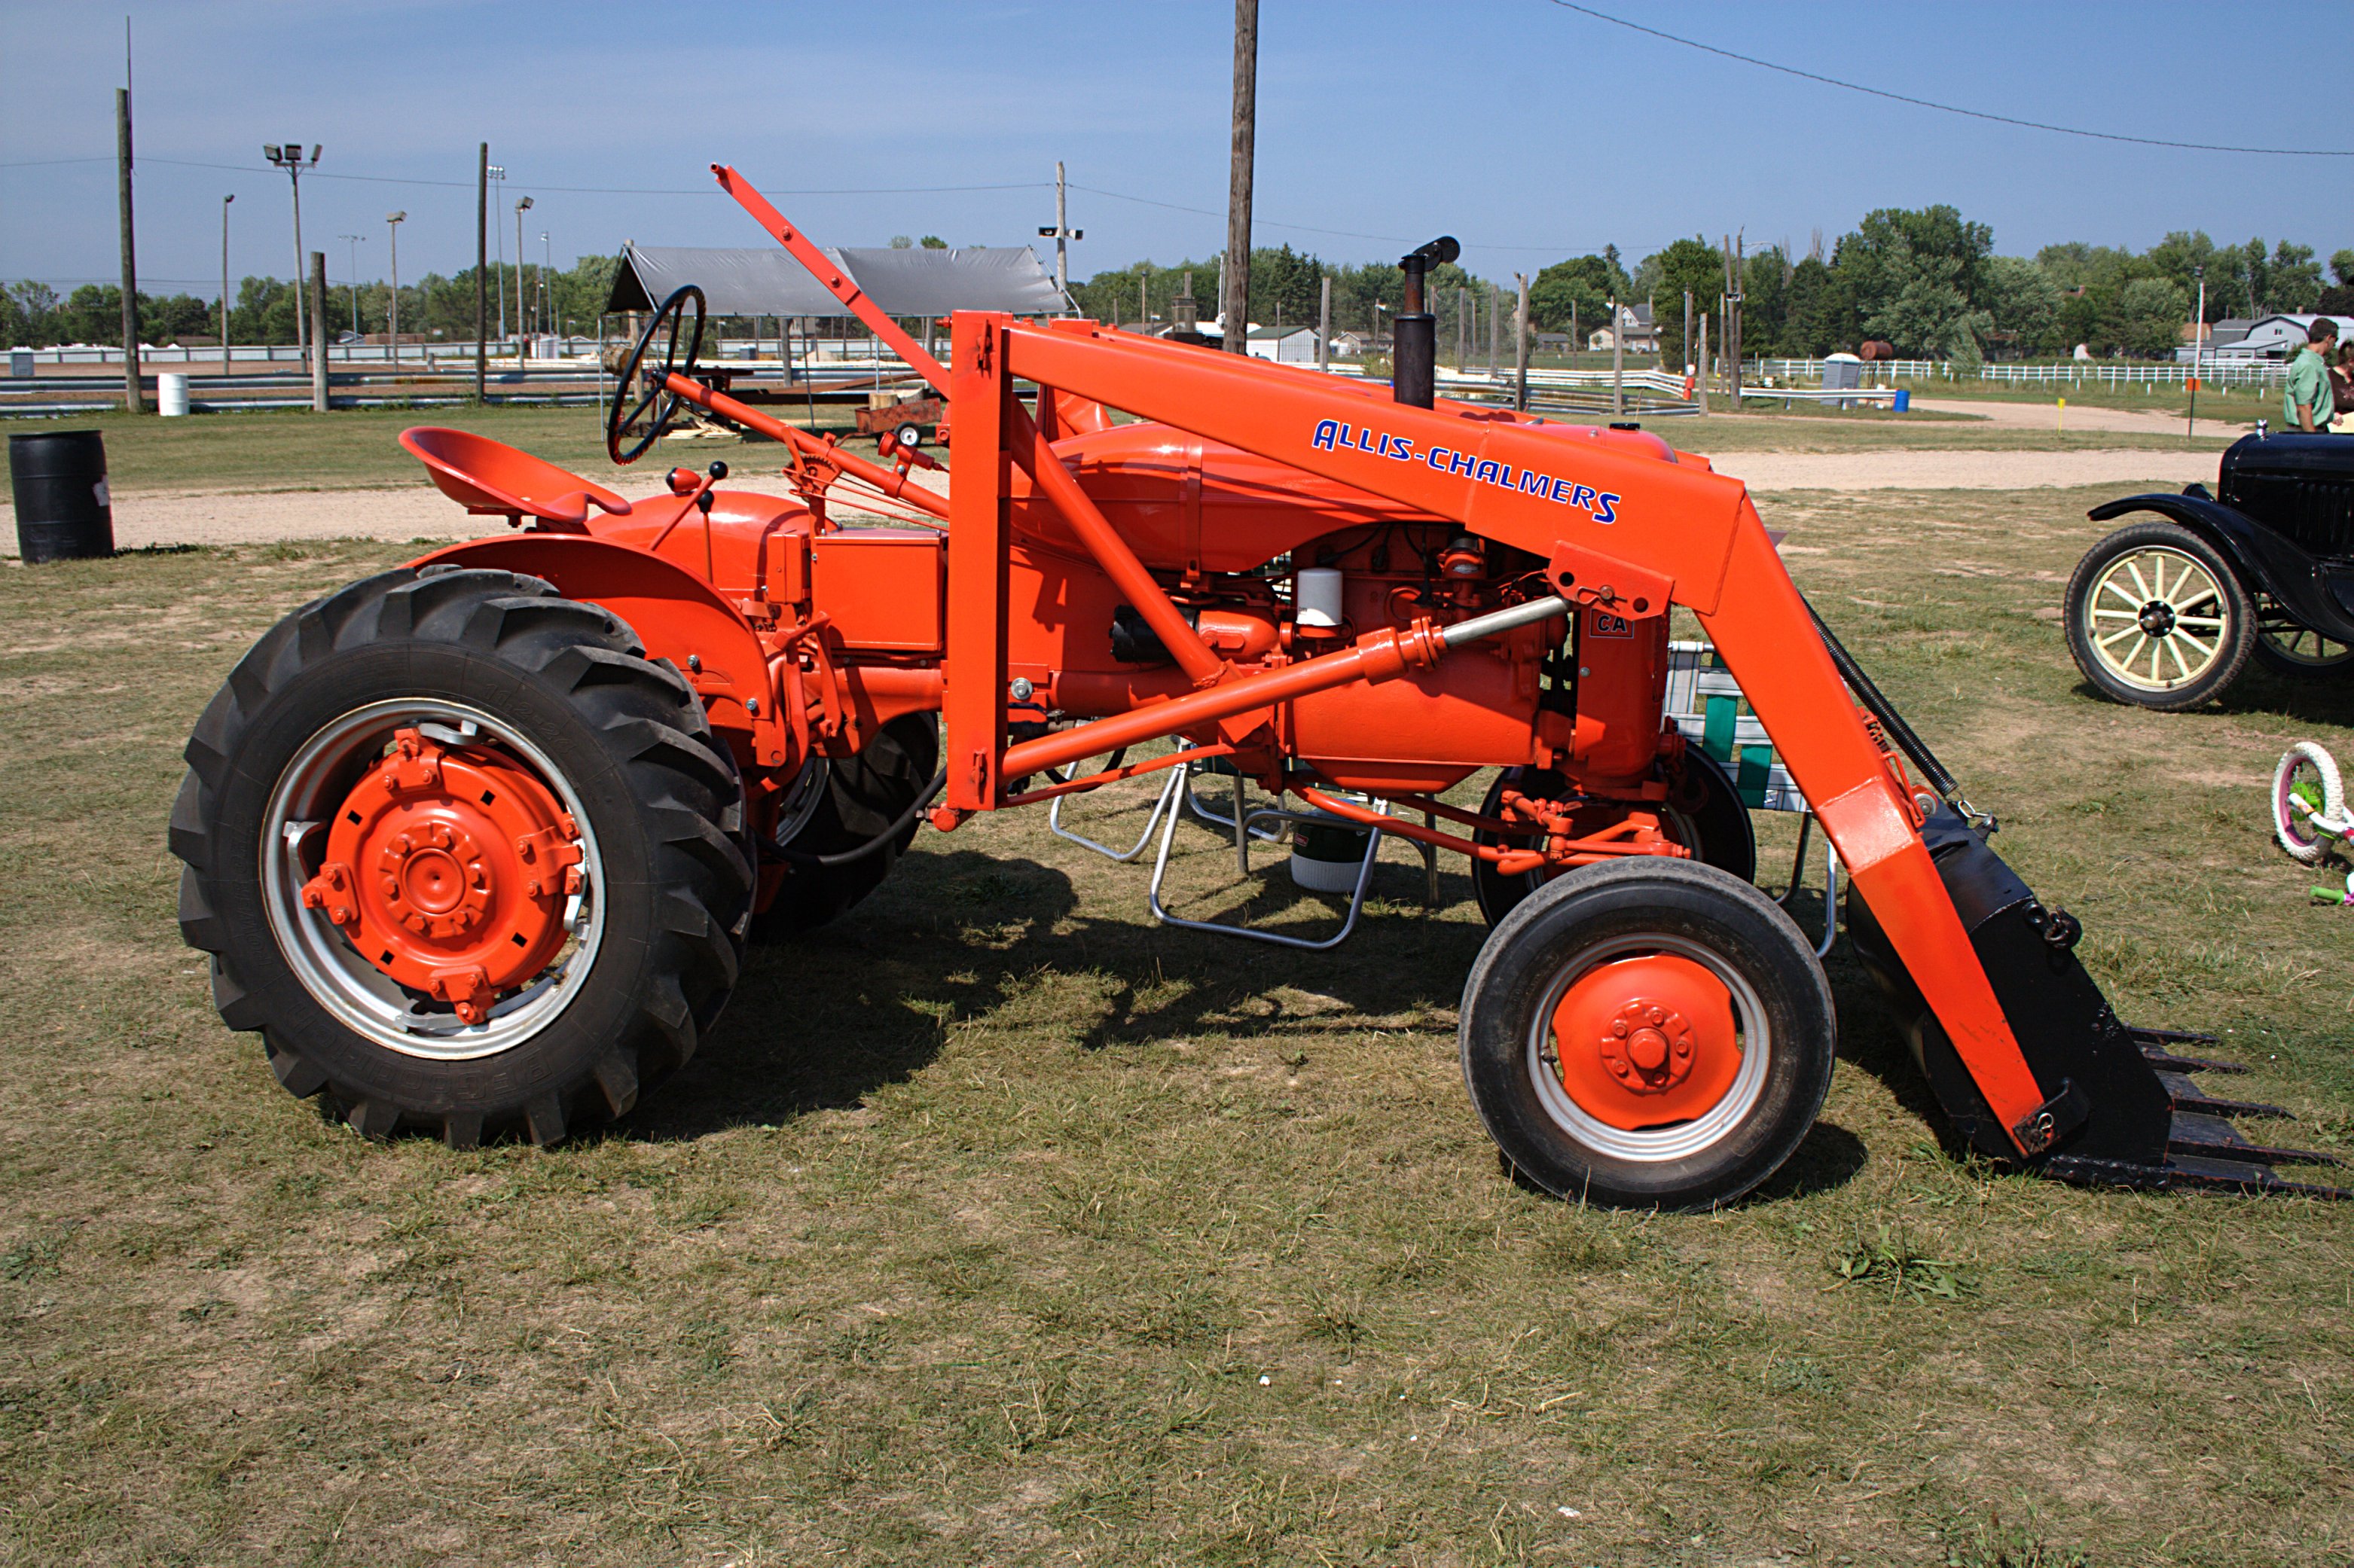 File:Allis-Chalmers tractor.jpg - Wikipedia